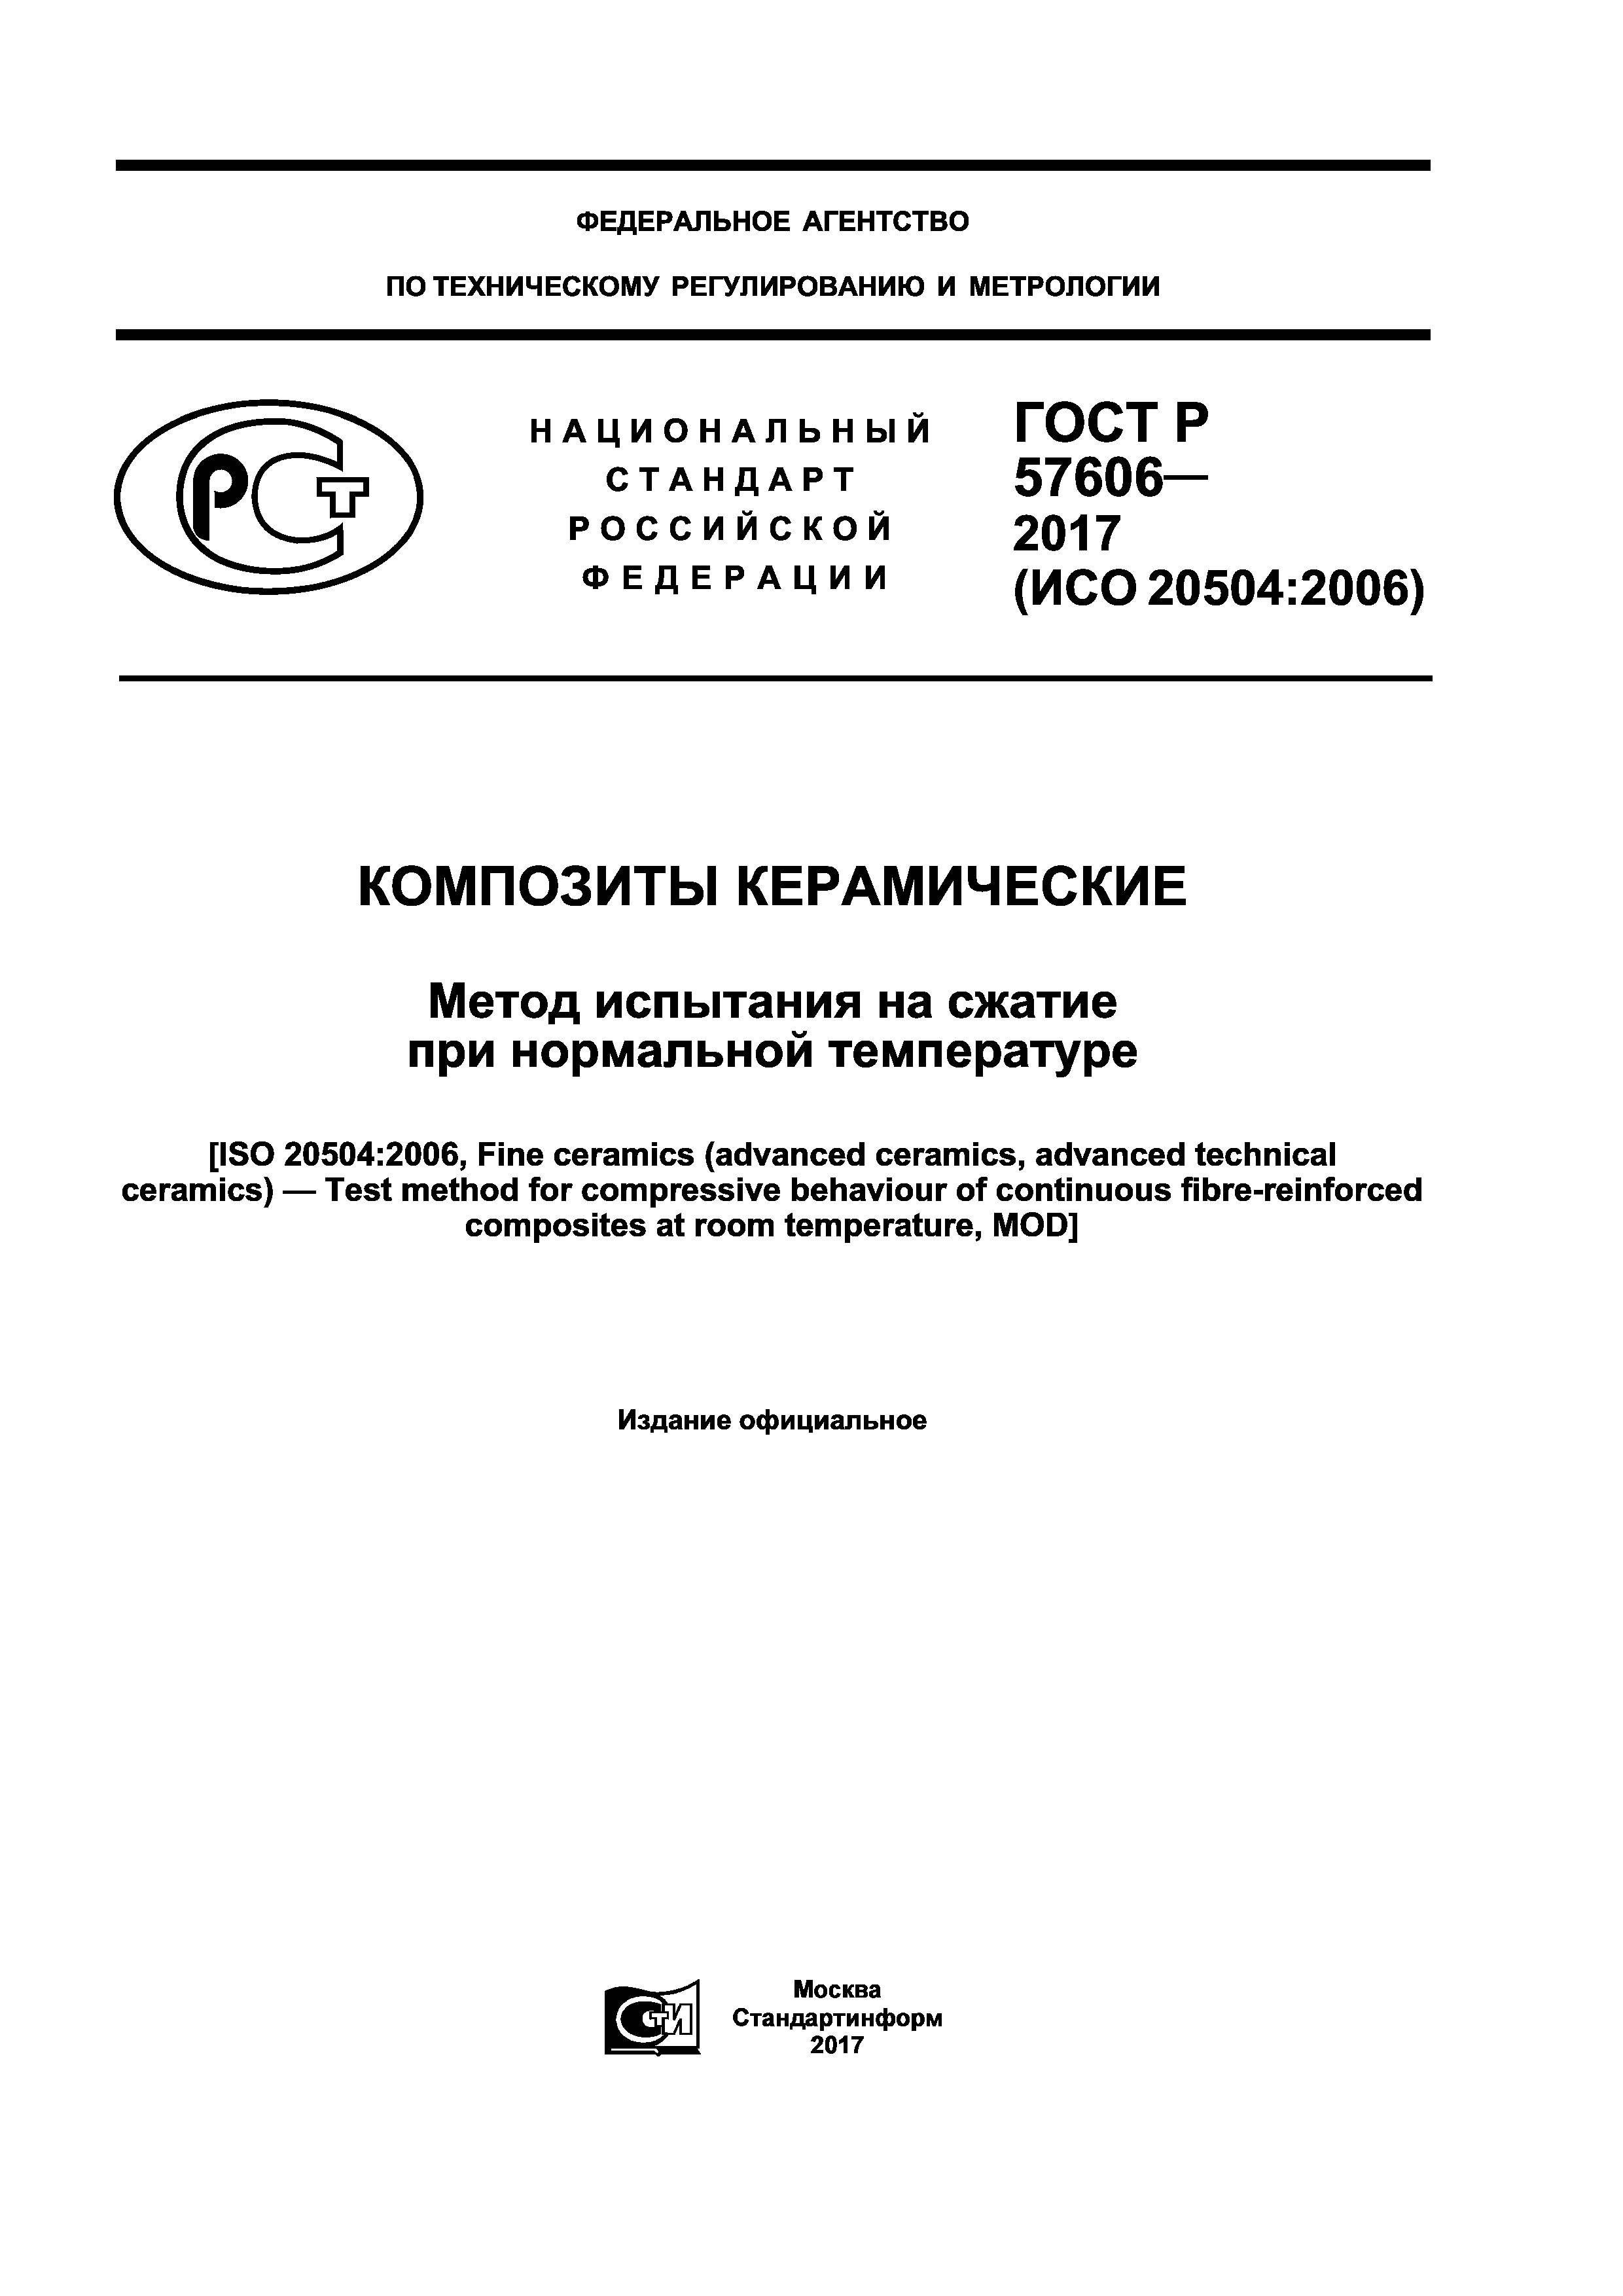 ГОСТ Р 57606-2017